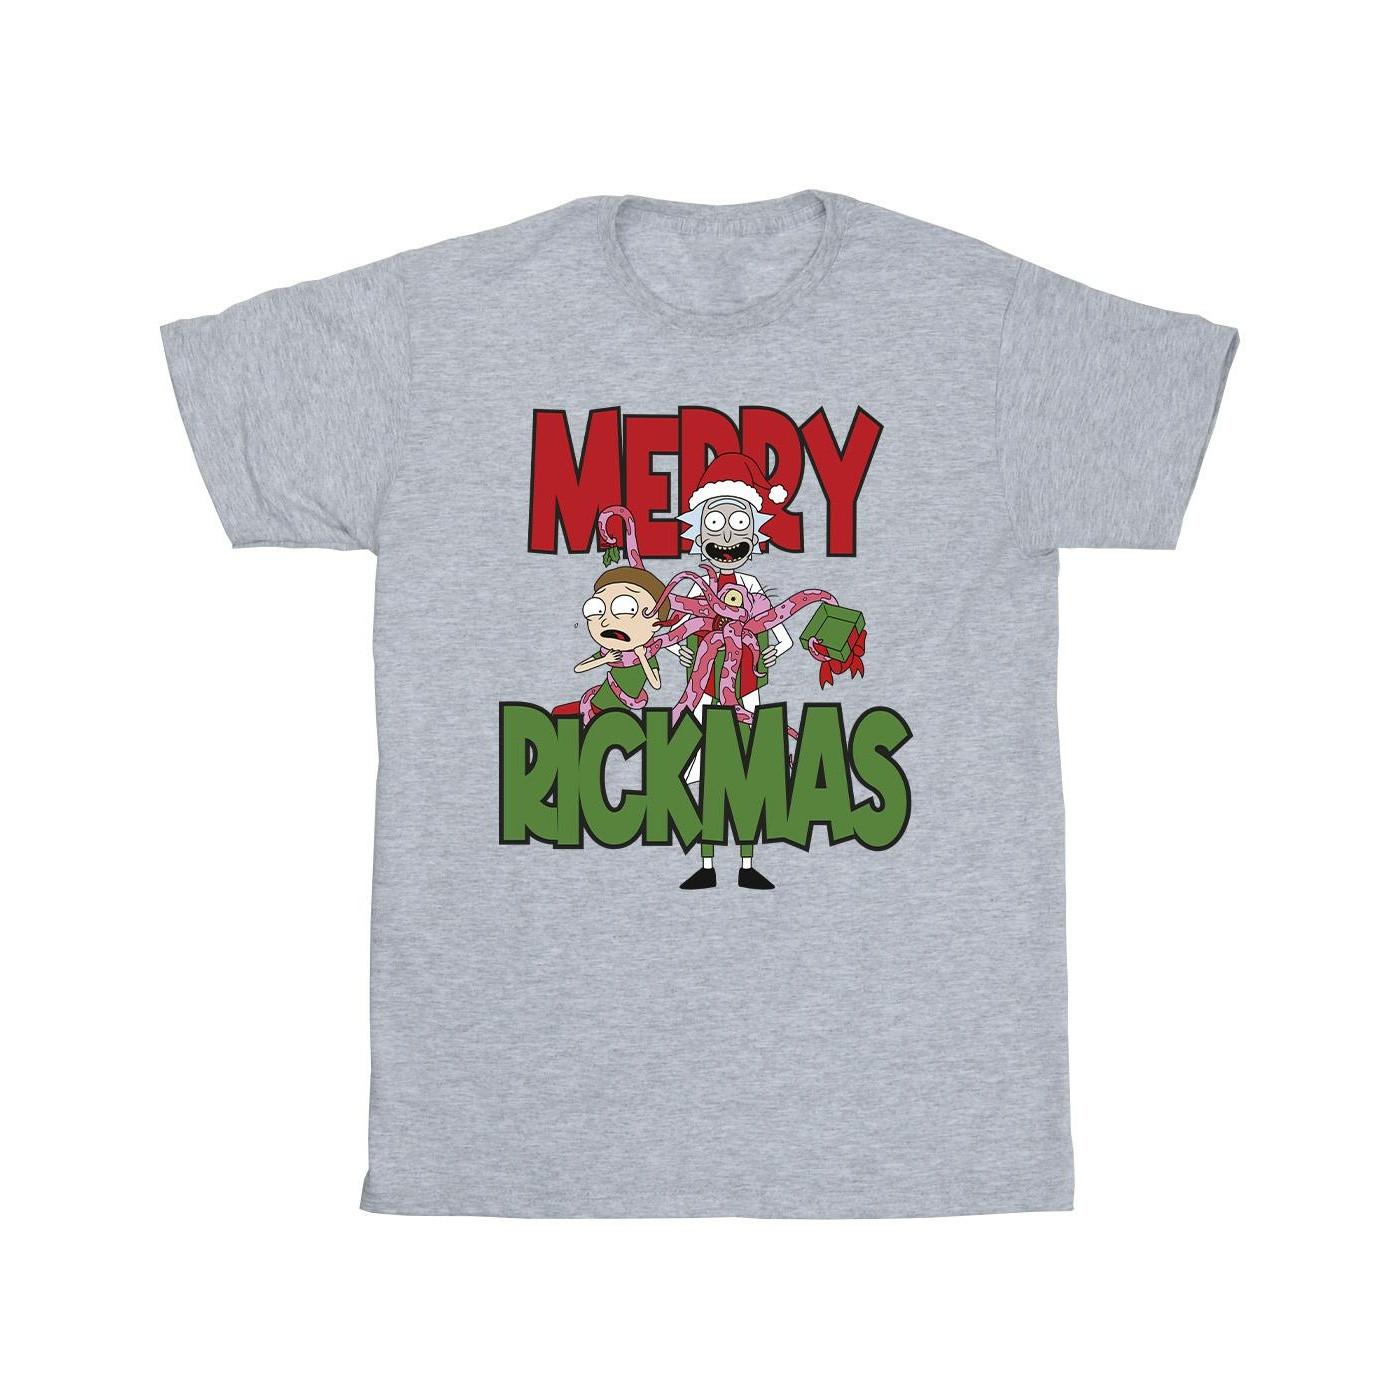 Merry Rickmas Tshirt Herren Grau S von Rick And Morty